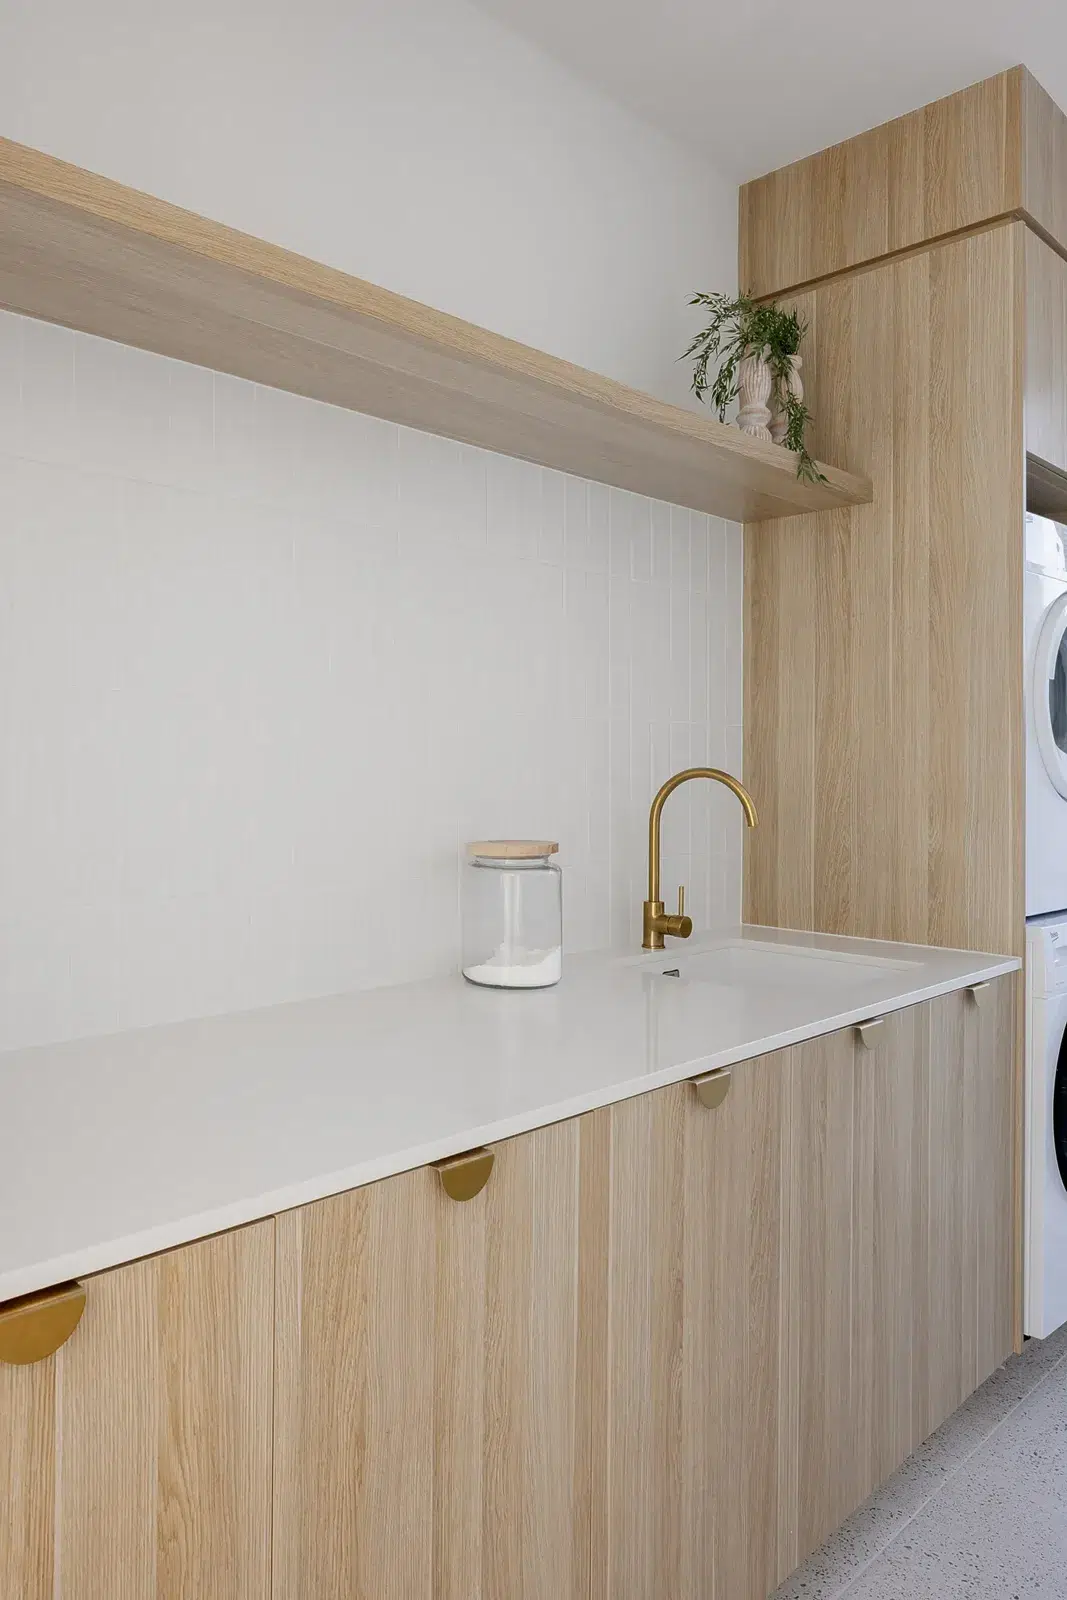 Chic, minimalist designer home interior in Asylo, with Greek-inspired design elements and modern luxury.